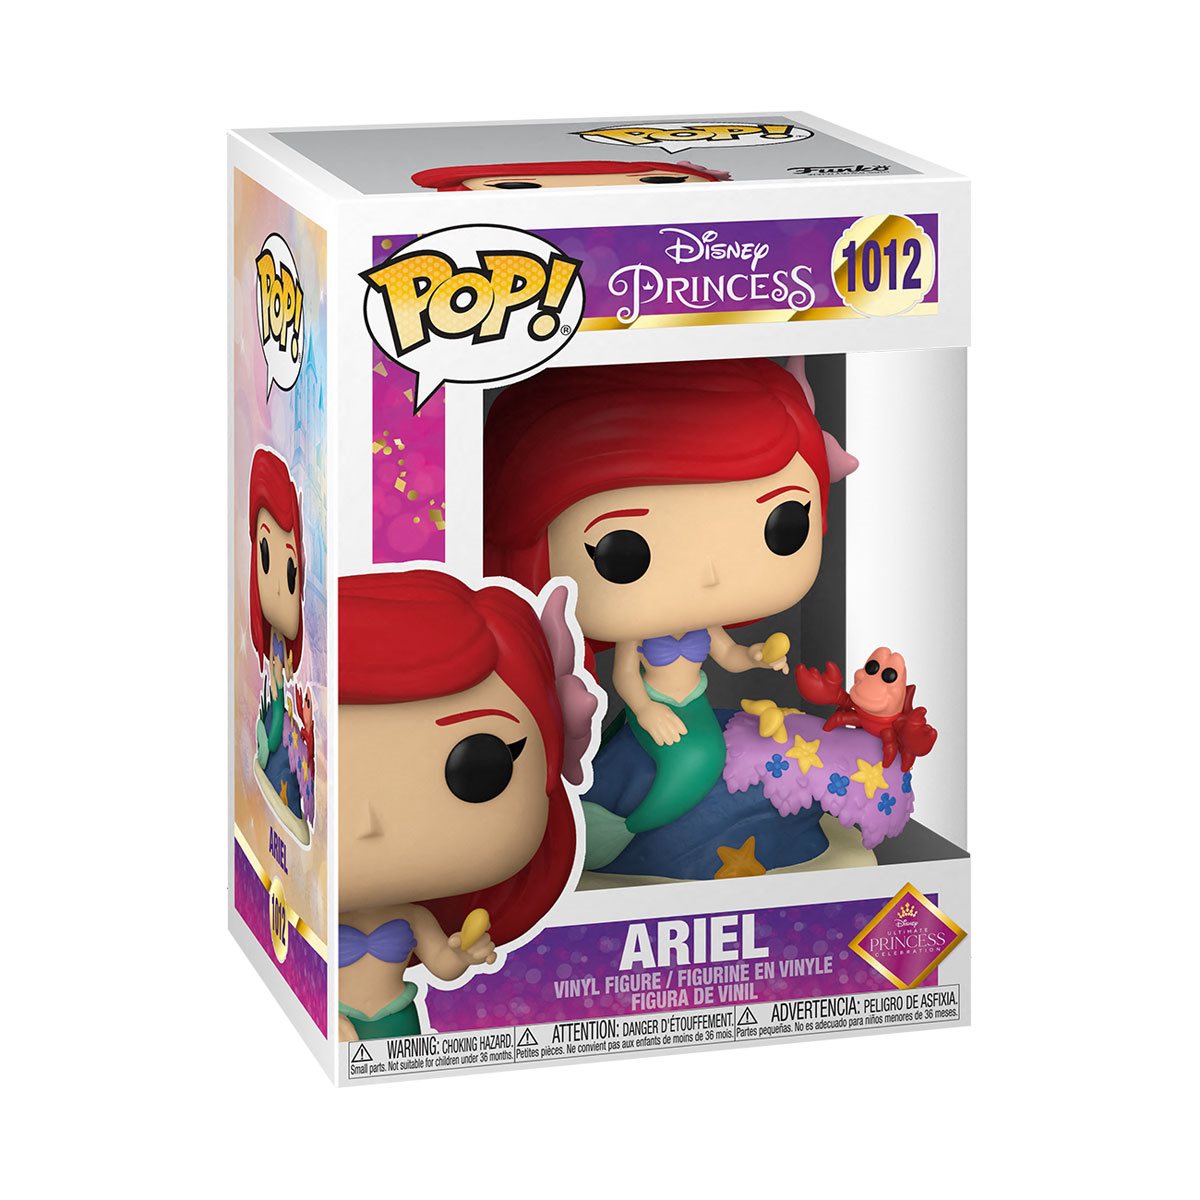 IN STOCK! Disney Ultimate Princess Ariel Pop! Vinyl Figure